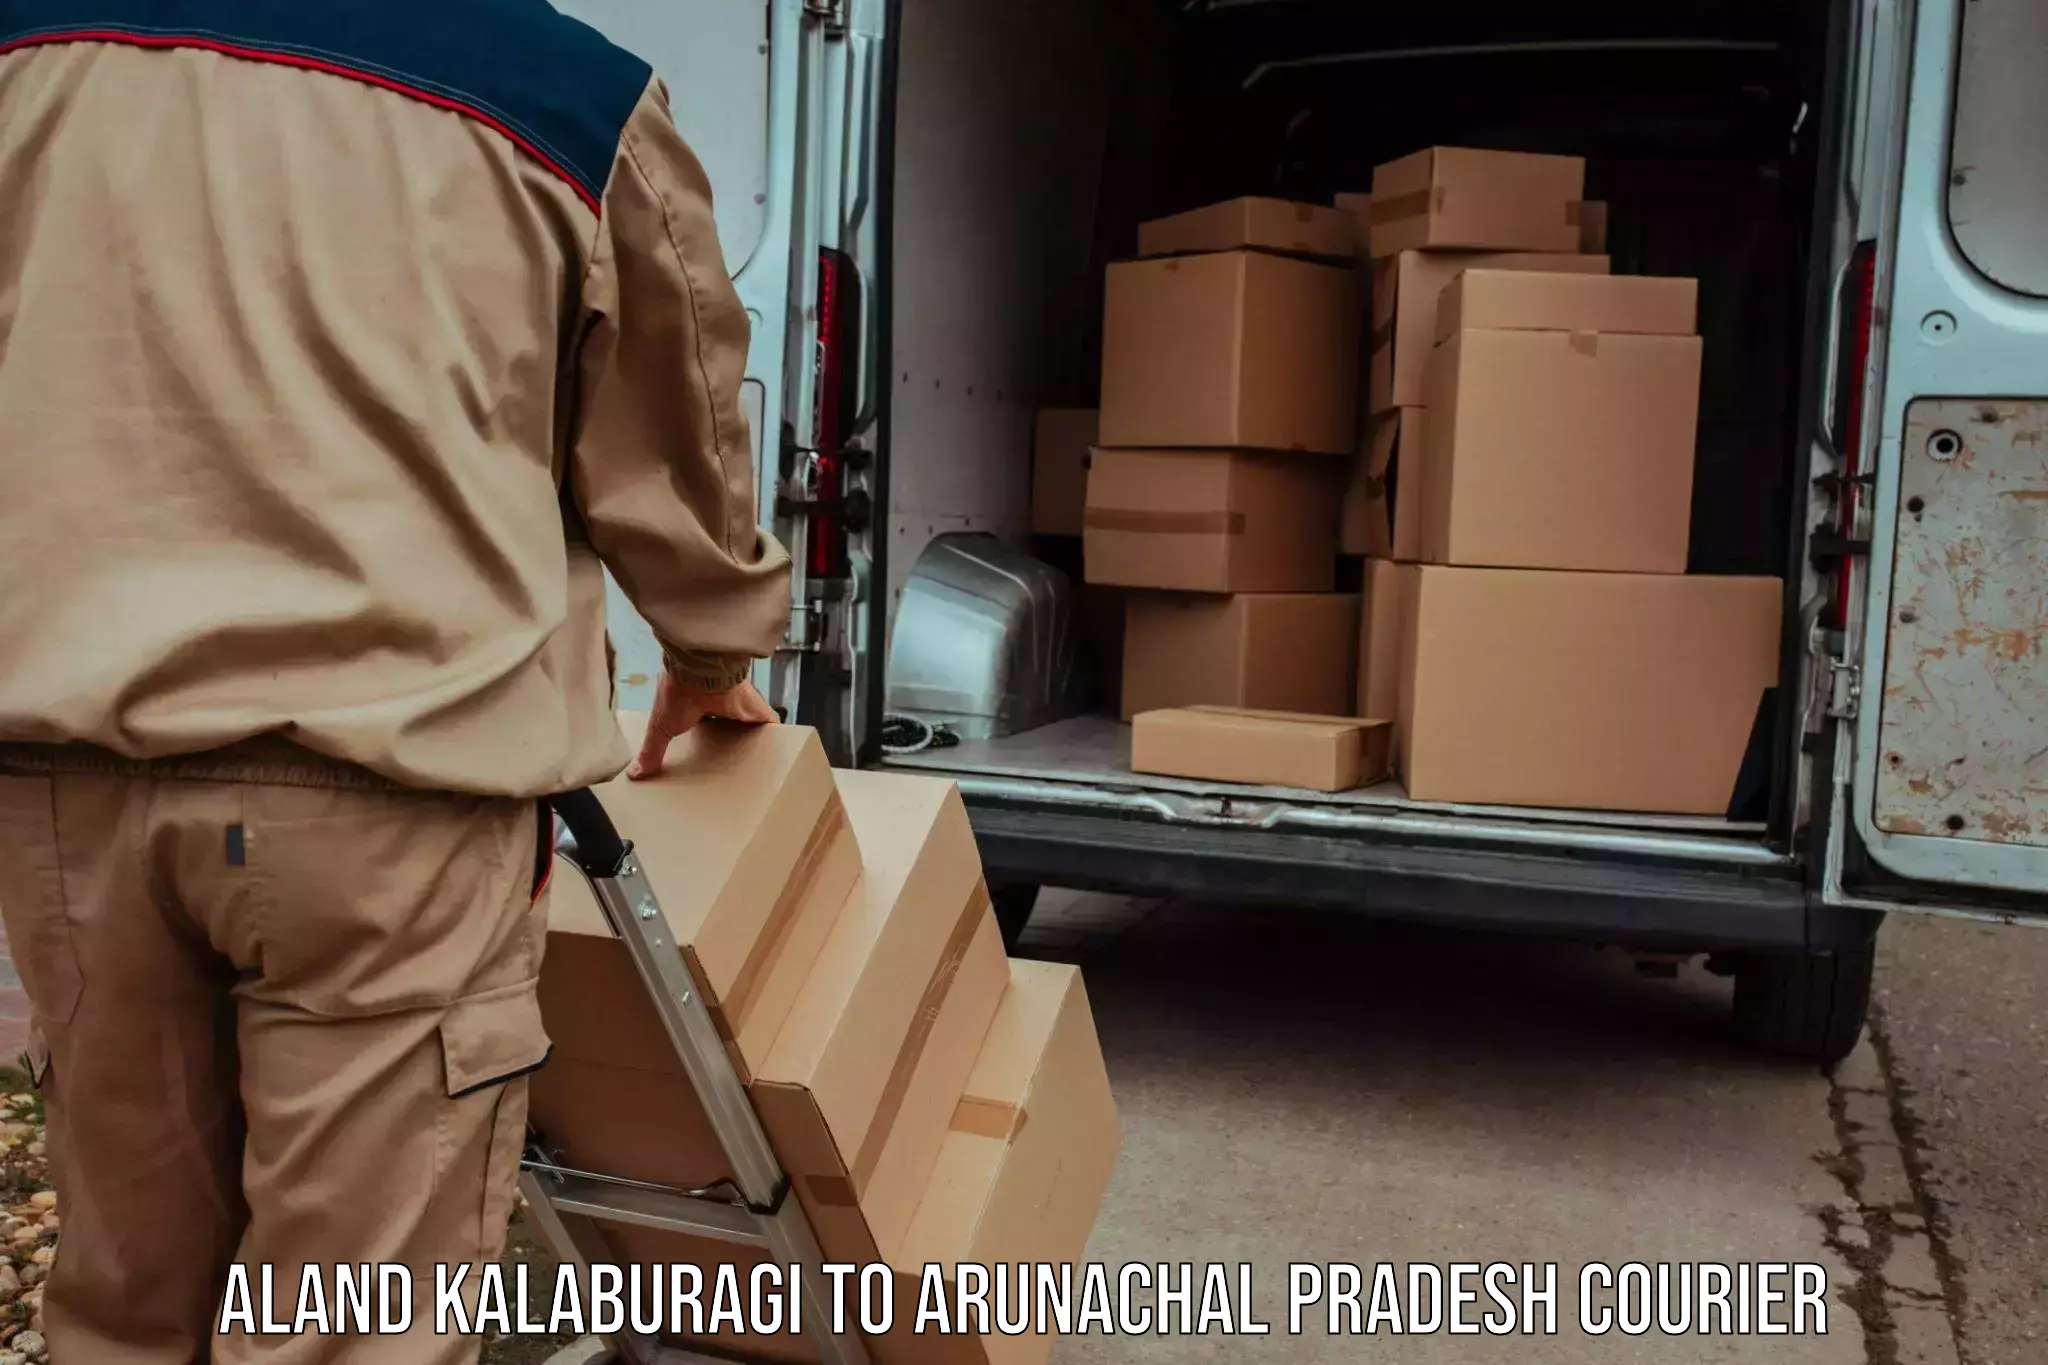 24-hour courier service Aland Kalaburagi to Yazali